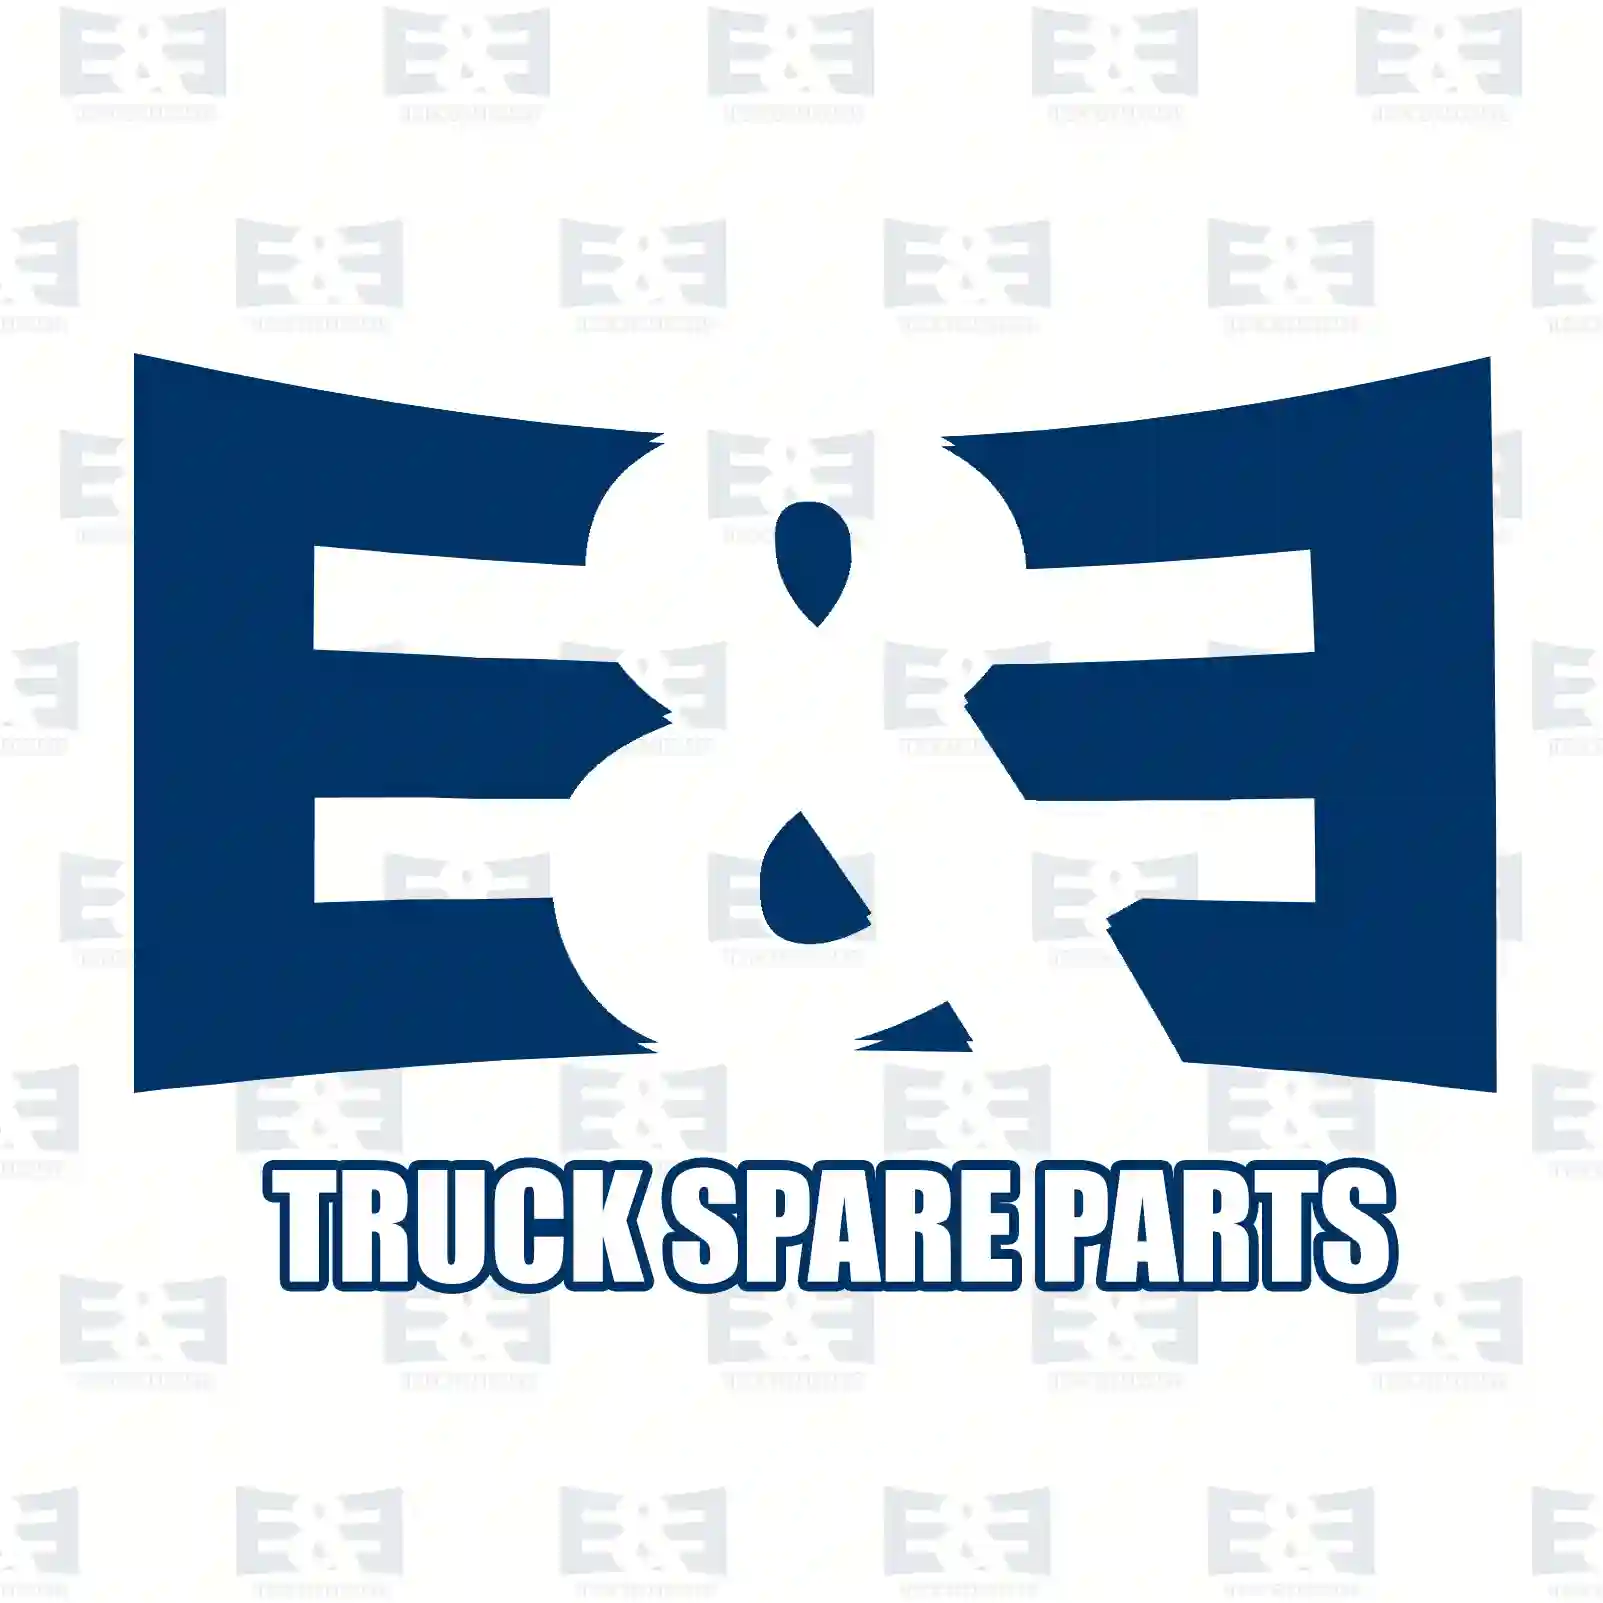 Clutch cylinder, 2E2288416, 218280, 55192726, 55270043, 218280 ||  2E2288416 E&E Truck Spare Parts | Truck Spare Parts, Auotomotive Spare Parts Clutch cylinder, 2E2288416, 218280, 55192726, 55270043, 218280 ||  2E2288416 E&E Truck Spare Parts | Truck Spare Parts, Auotomotive Spare Parts